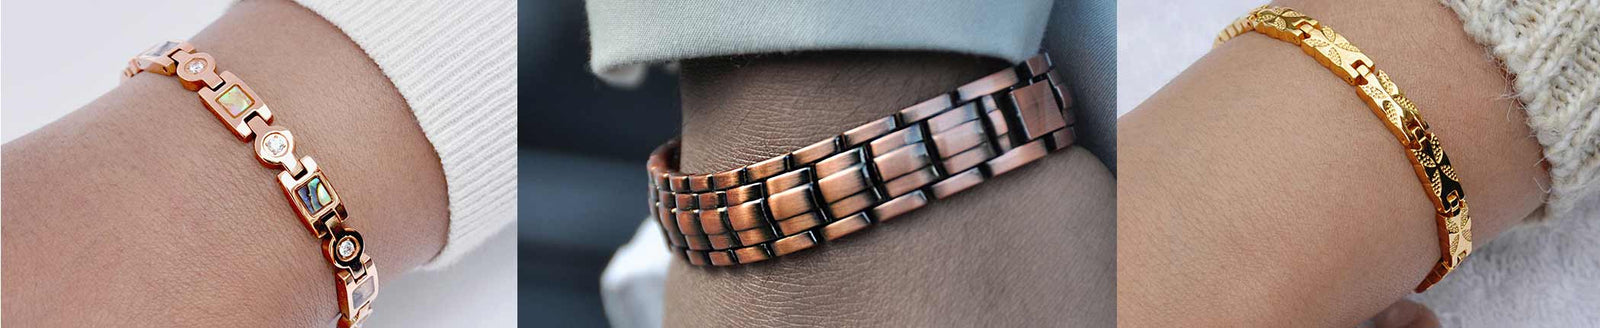 Copper bracelet healing- Does it work? | Optum Perks